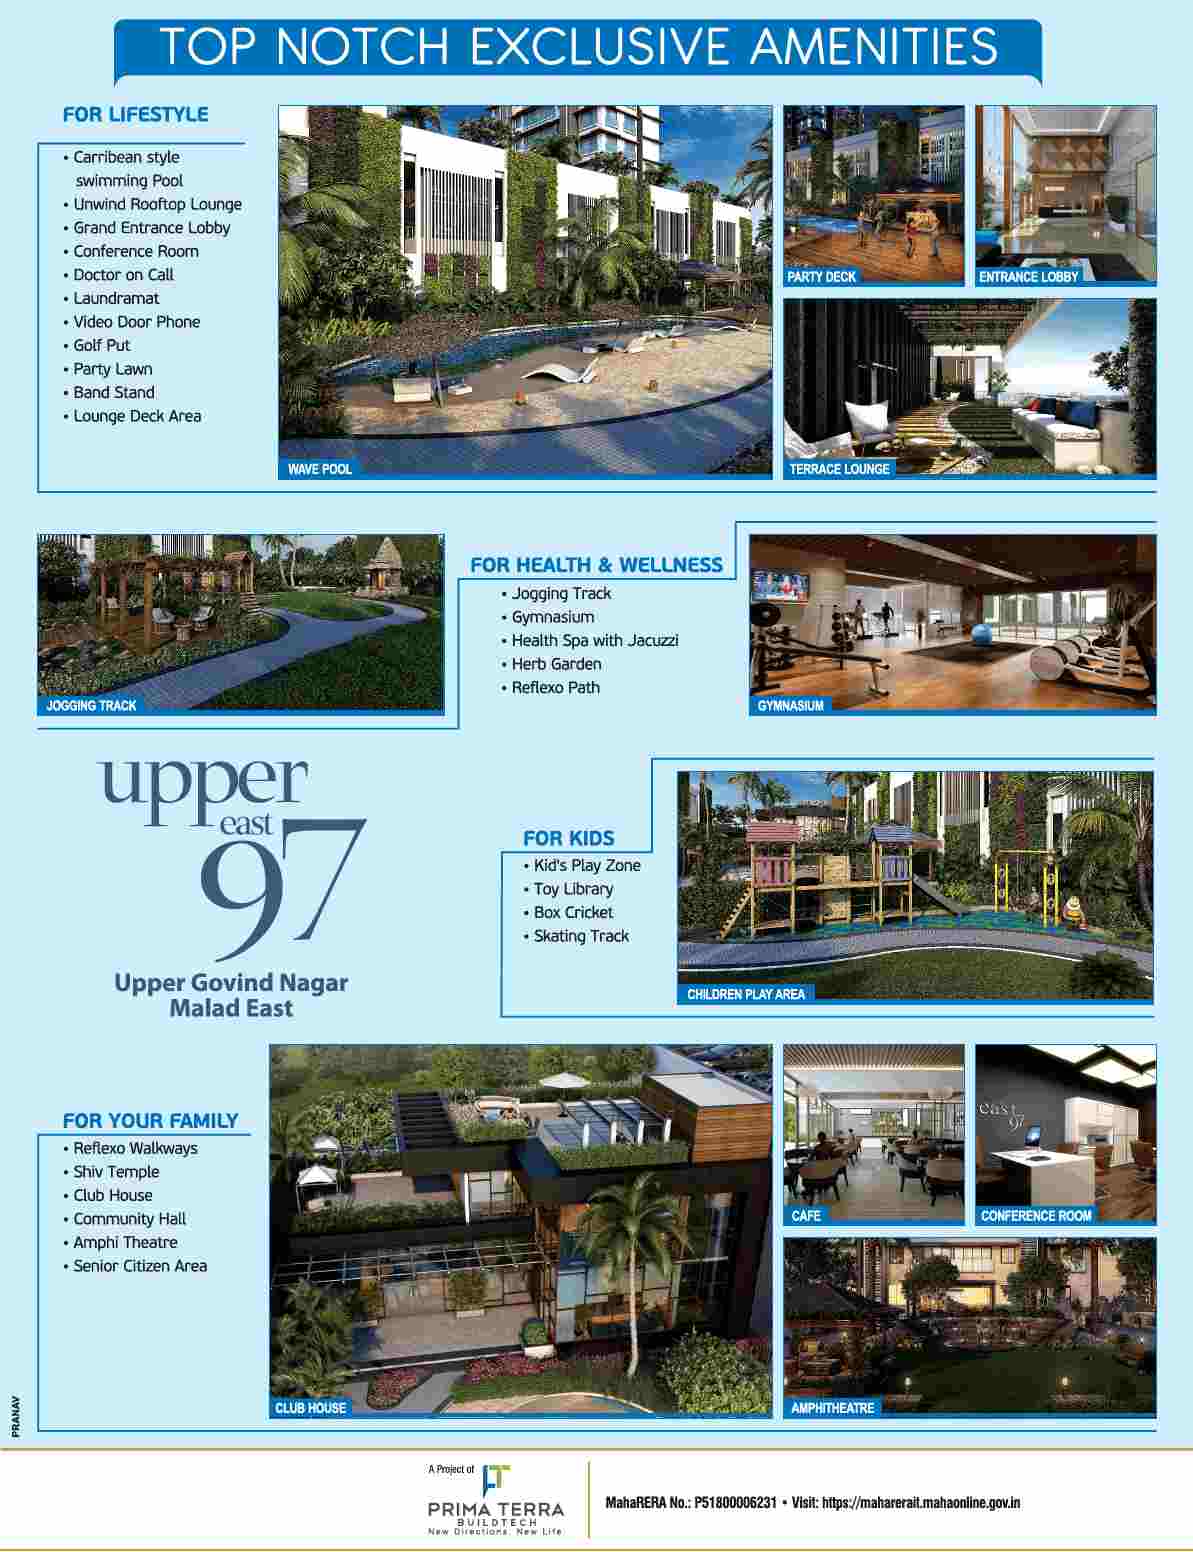 Enjoy top notch exclusive amenities at Prima Upper East 97 in Mumbai Update